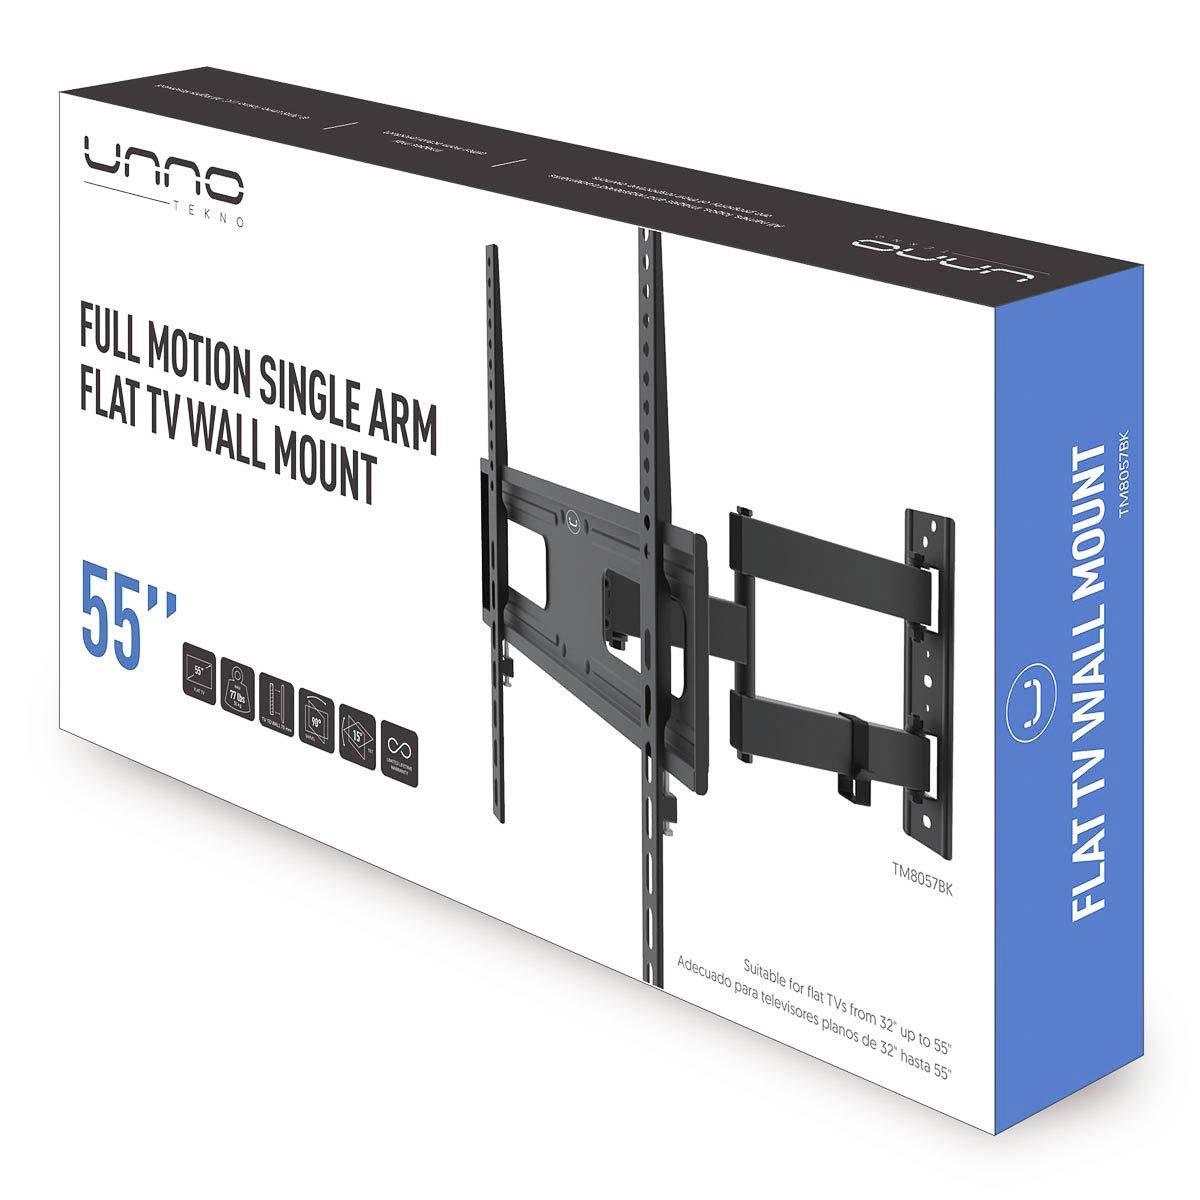 TV WALL MOUNT FULL MOTION SINGLE ARM 55" - ShopLibertyStore.com